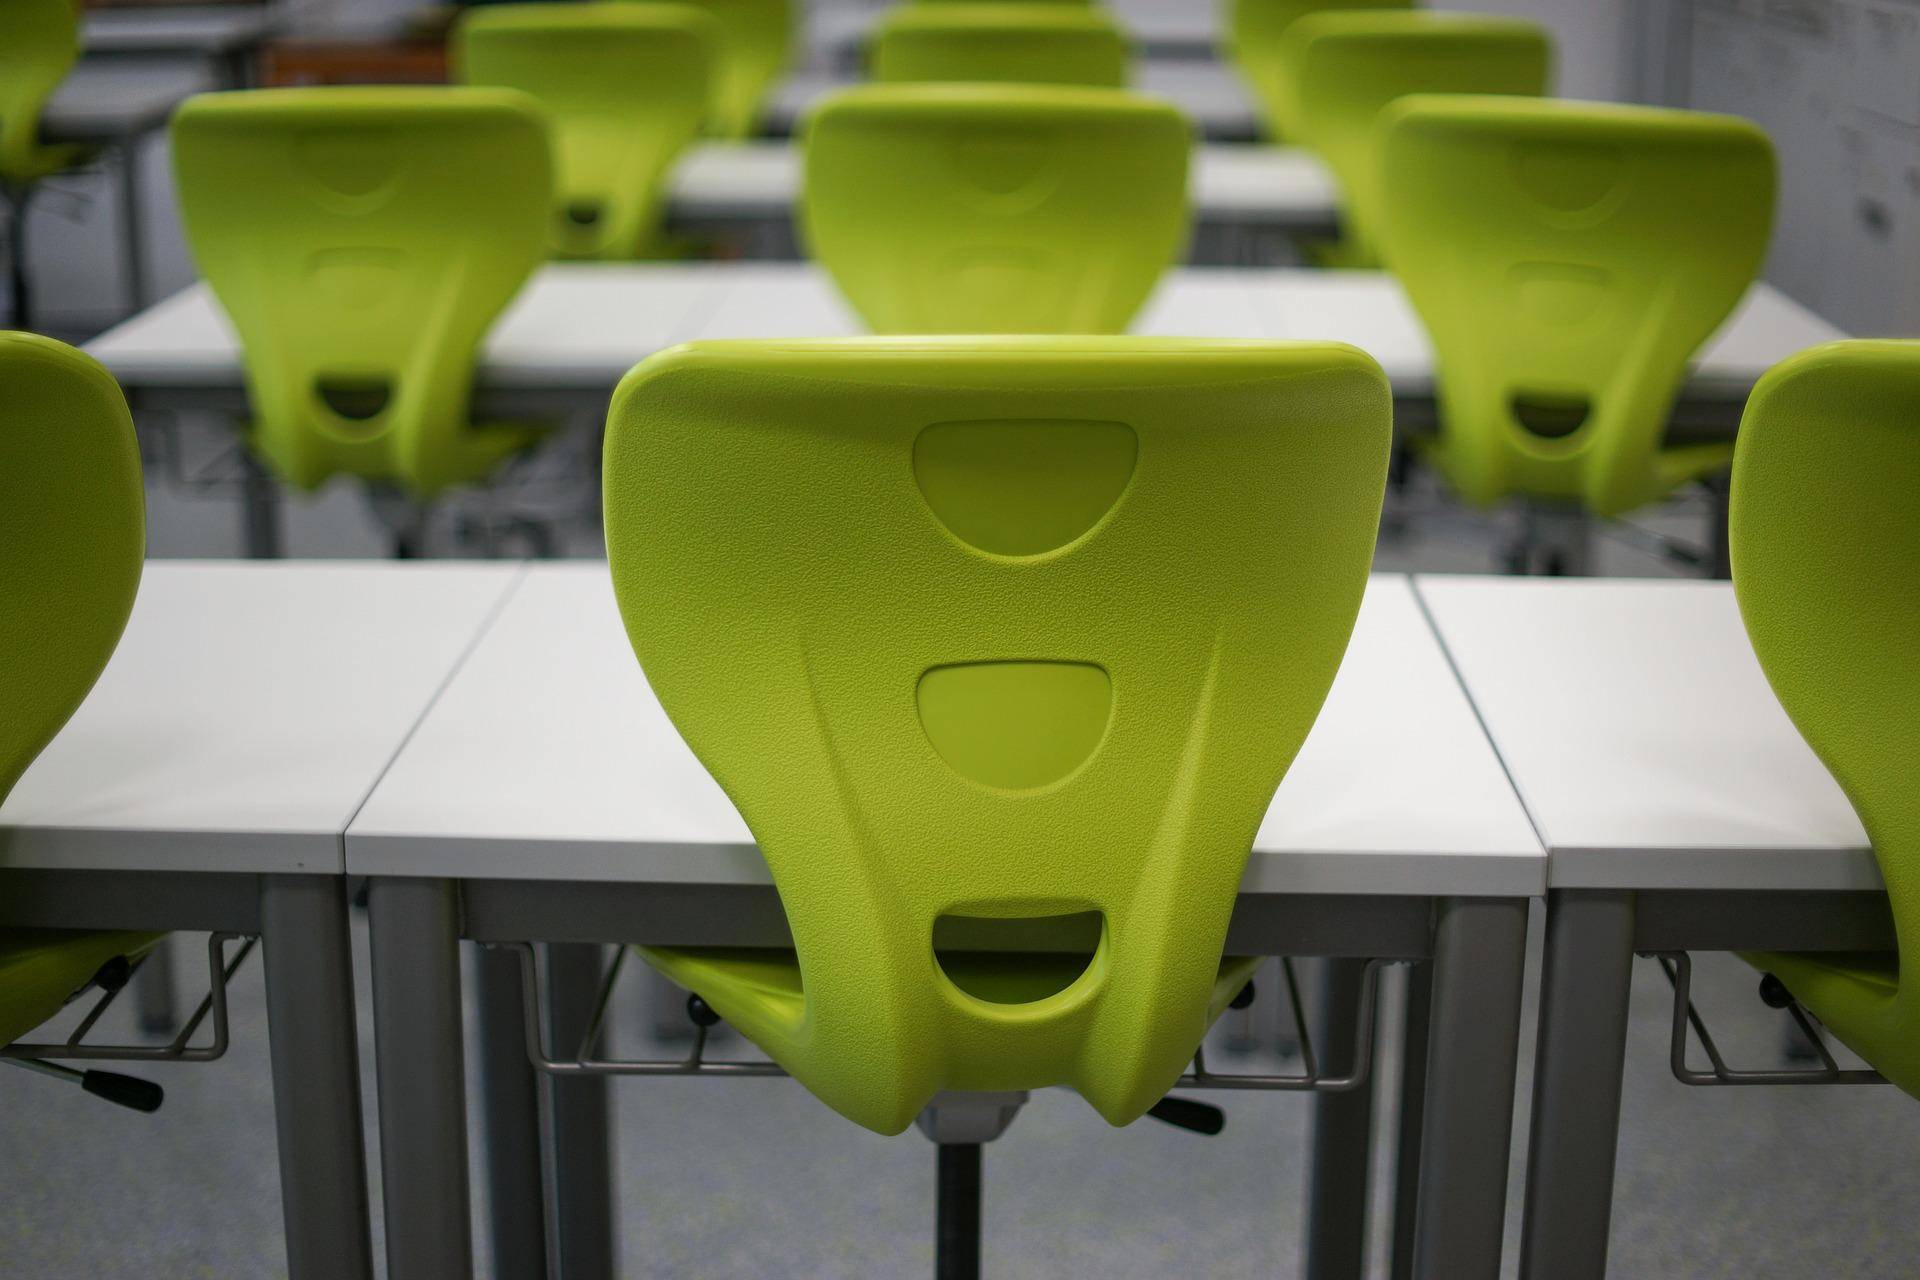 The green classroom